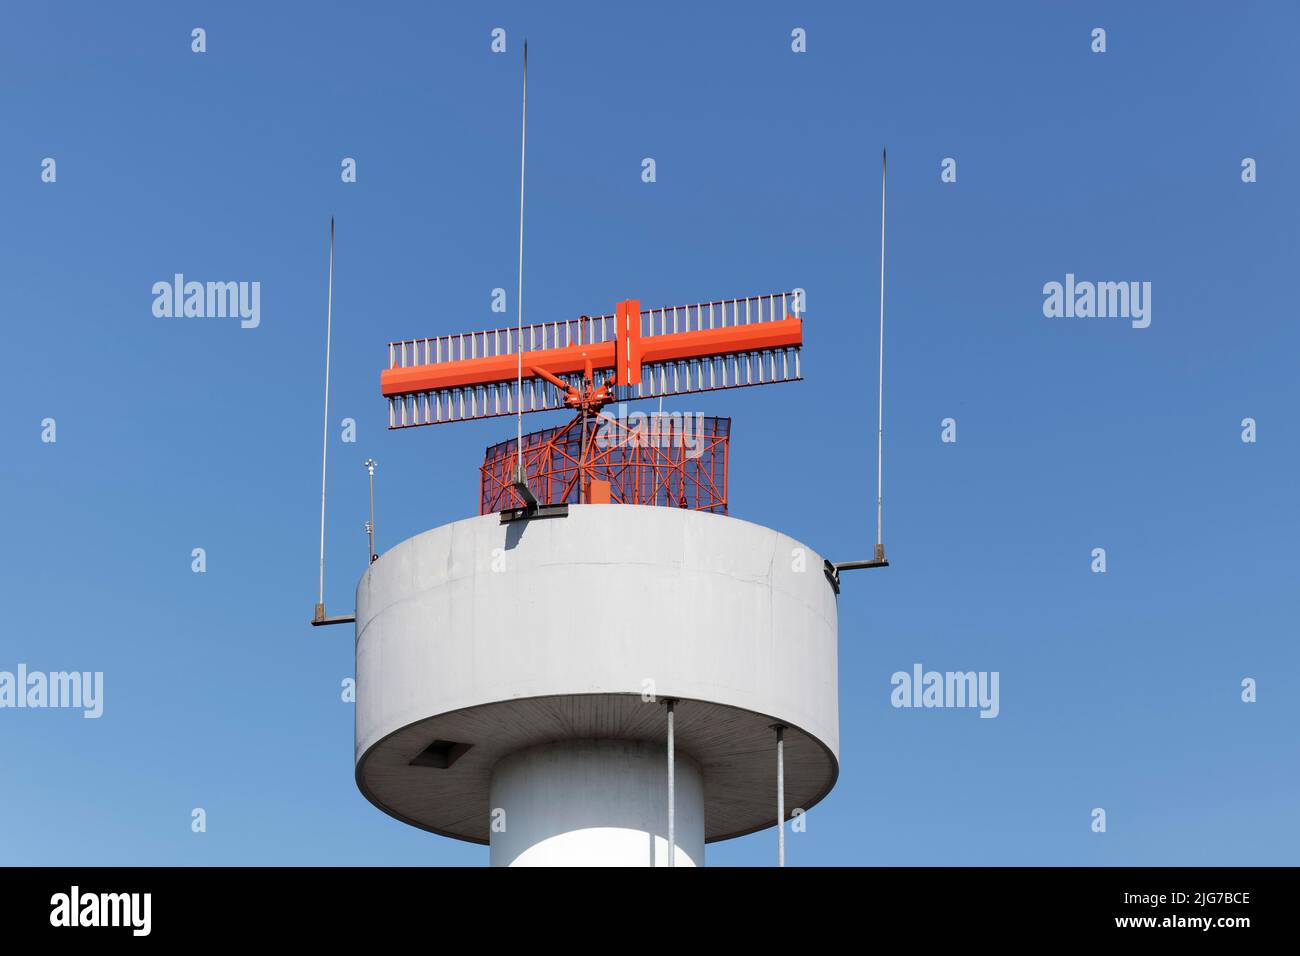 Radar tower, blue sky, Duesseldorf Airport, North Rhine-Westphalia, Germany Stock Photo